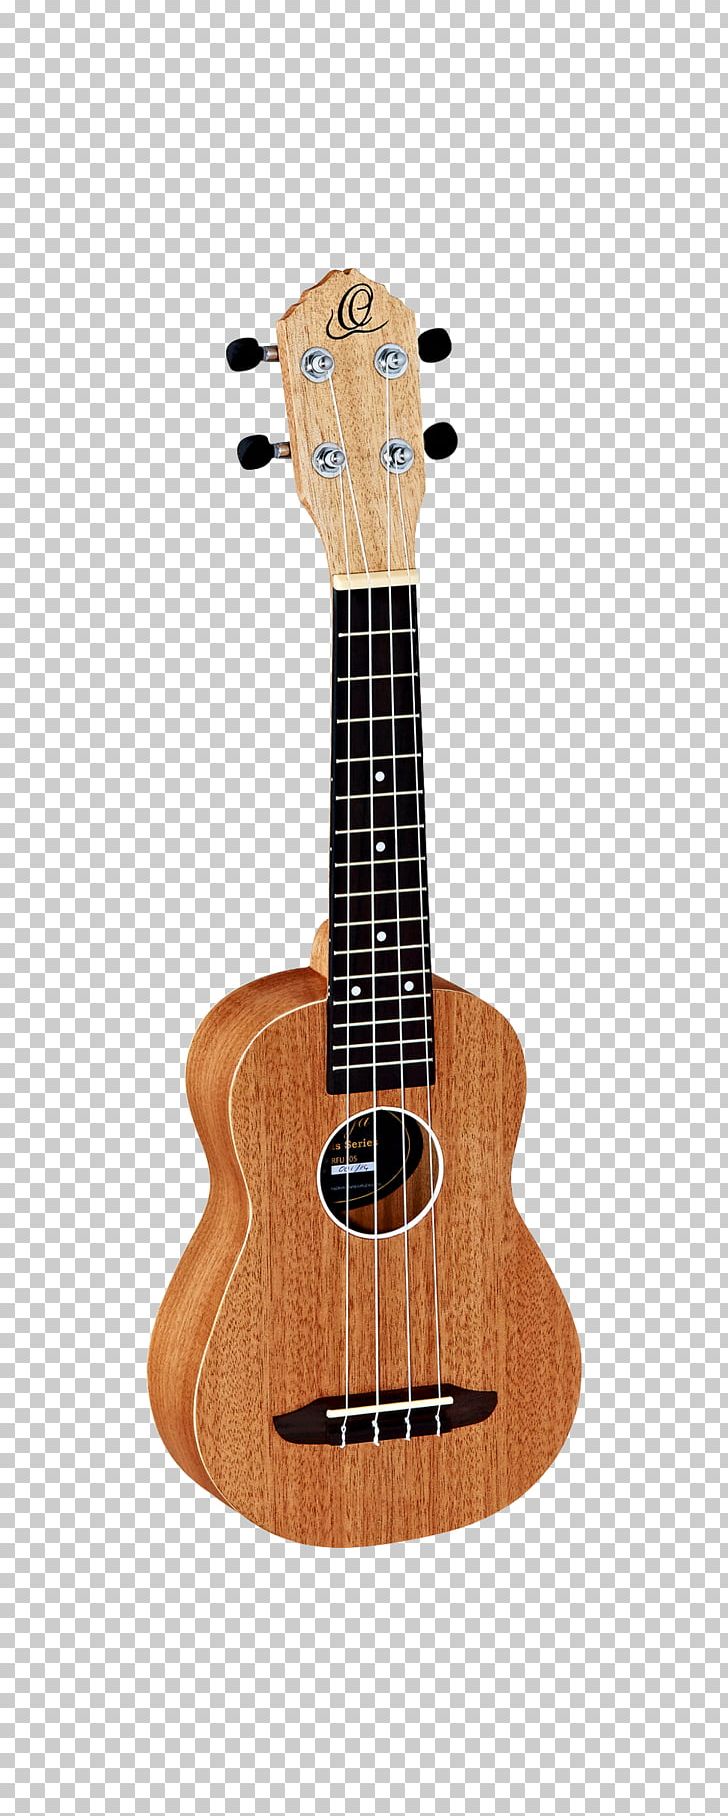 Ukulele Guitar Musical Instruments Tonewood Seagull PNG, Clipart, Amancio Ortega, Classical Guitar, Concert, Cuatro, Guitar Accessory Free PNG Download